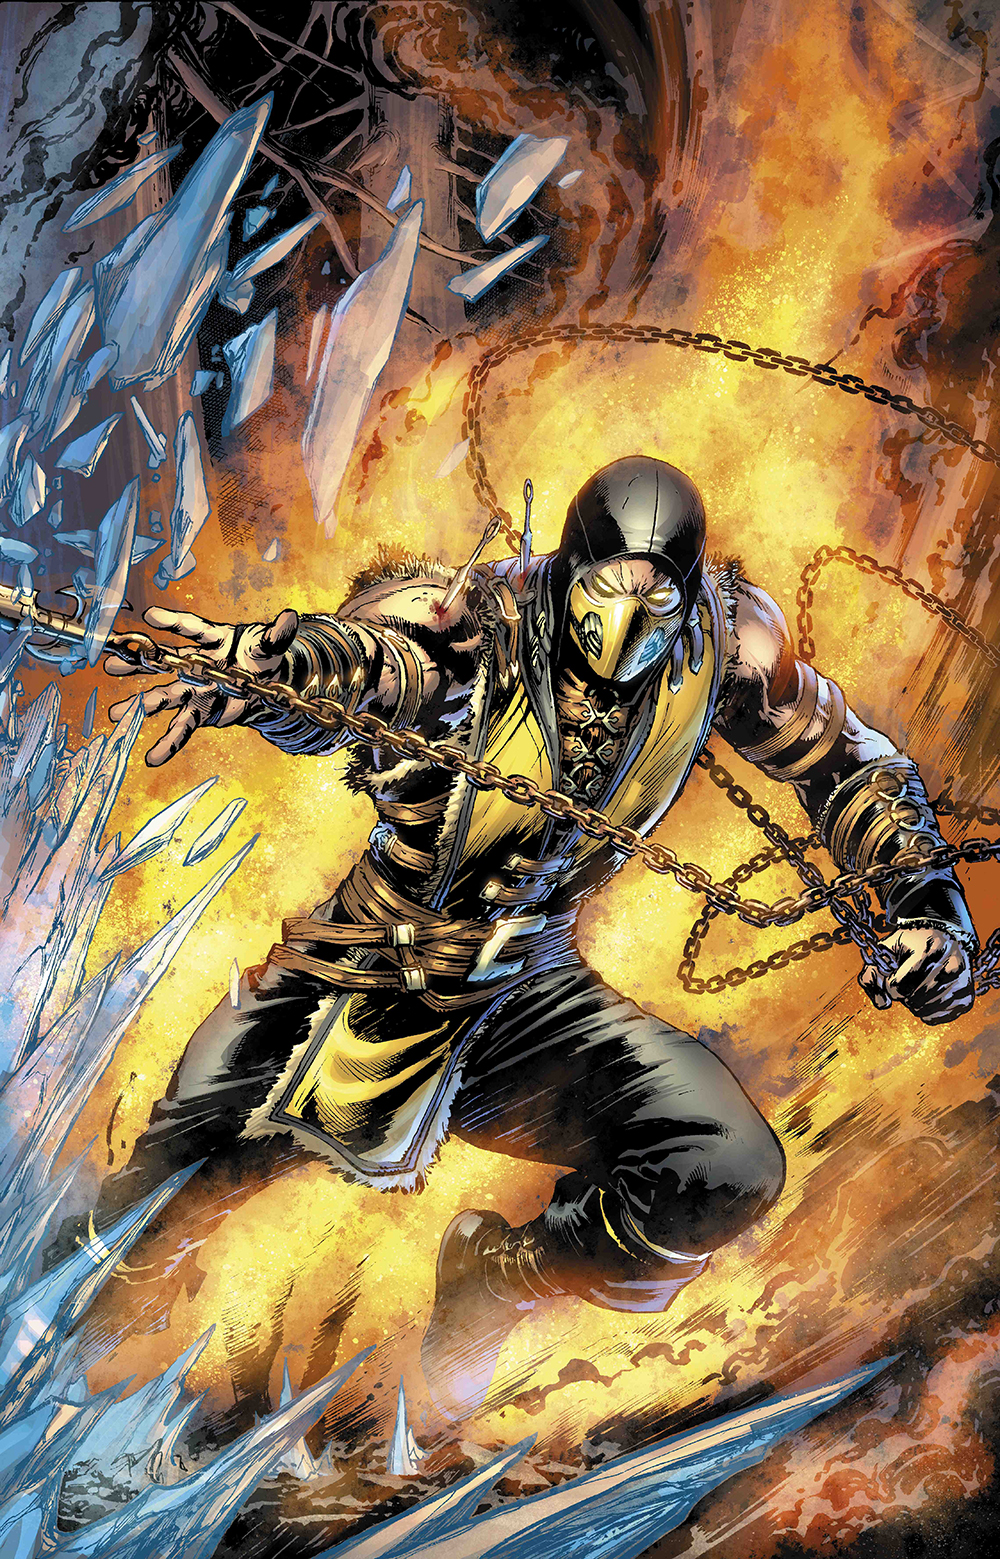 Free: Mortal Kombat X Mortal Kombat: Deadly Alliance Kenshi Video Games Wiki  - 